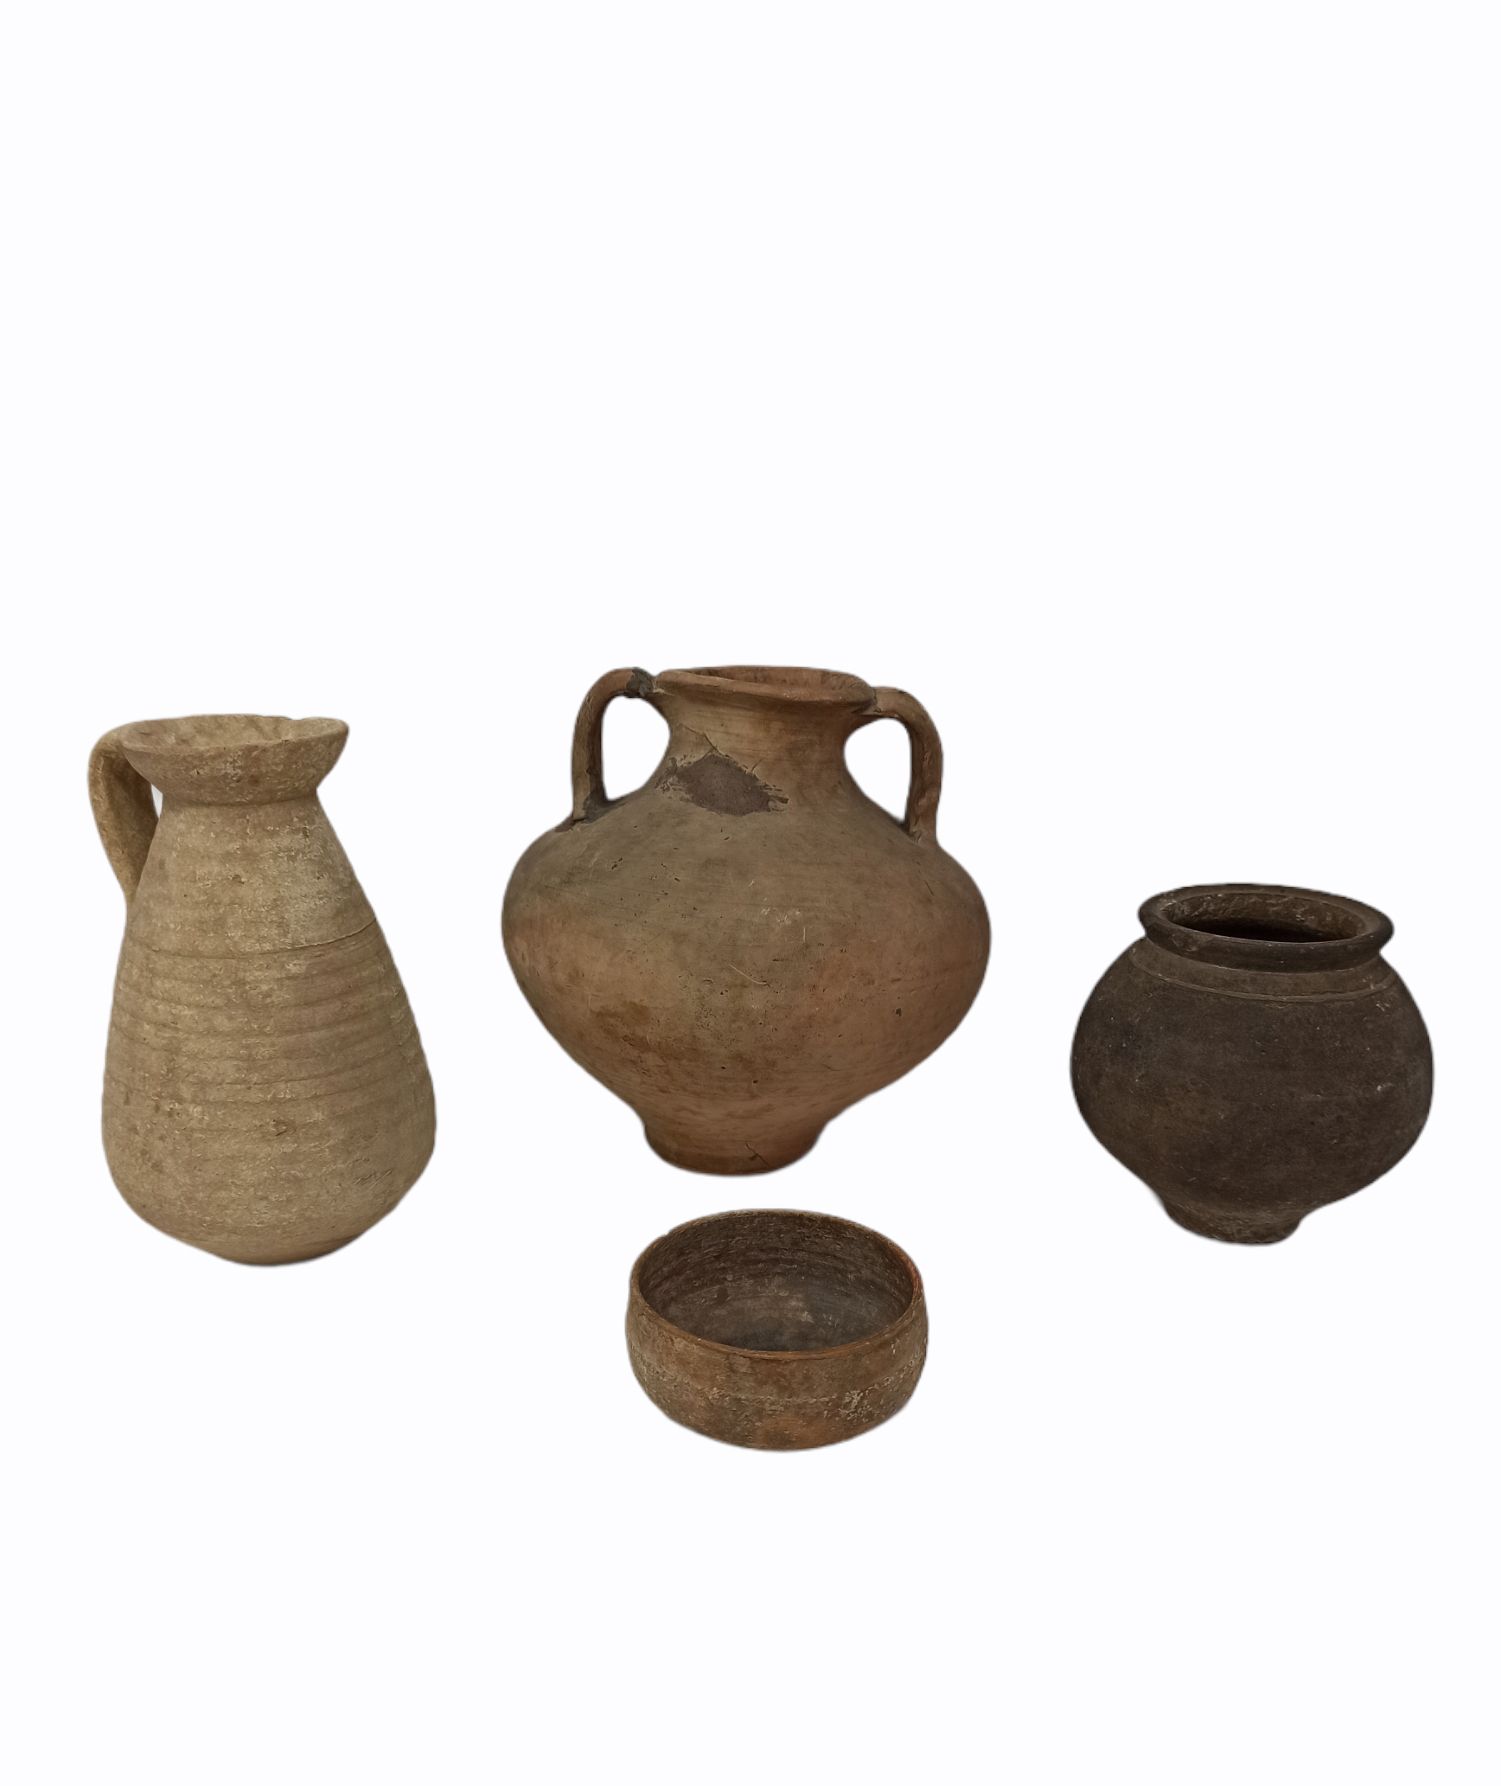 Null 拍品包括一个碗和一个球状体的骨灰盒，一个梨形体的壶和一个有两个手柄的罐子。

普通赤土和一个手柄粘在后面。

罗马艺术

H.5厘米 - 12厘米 -&hellip;